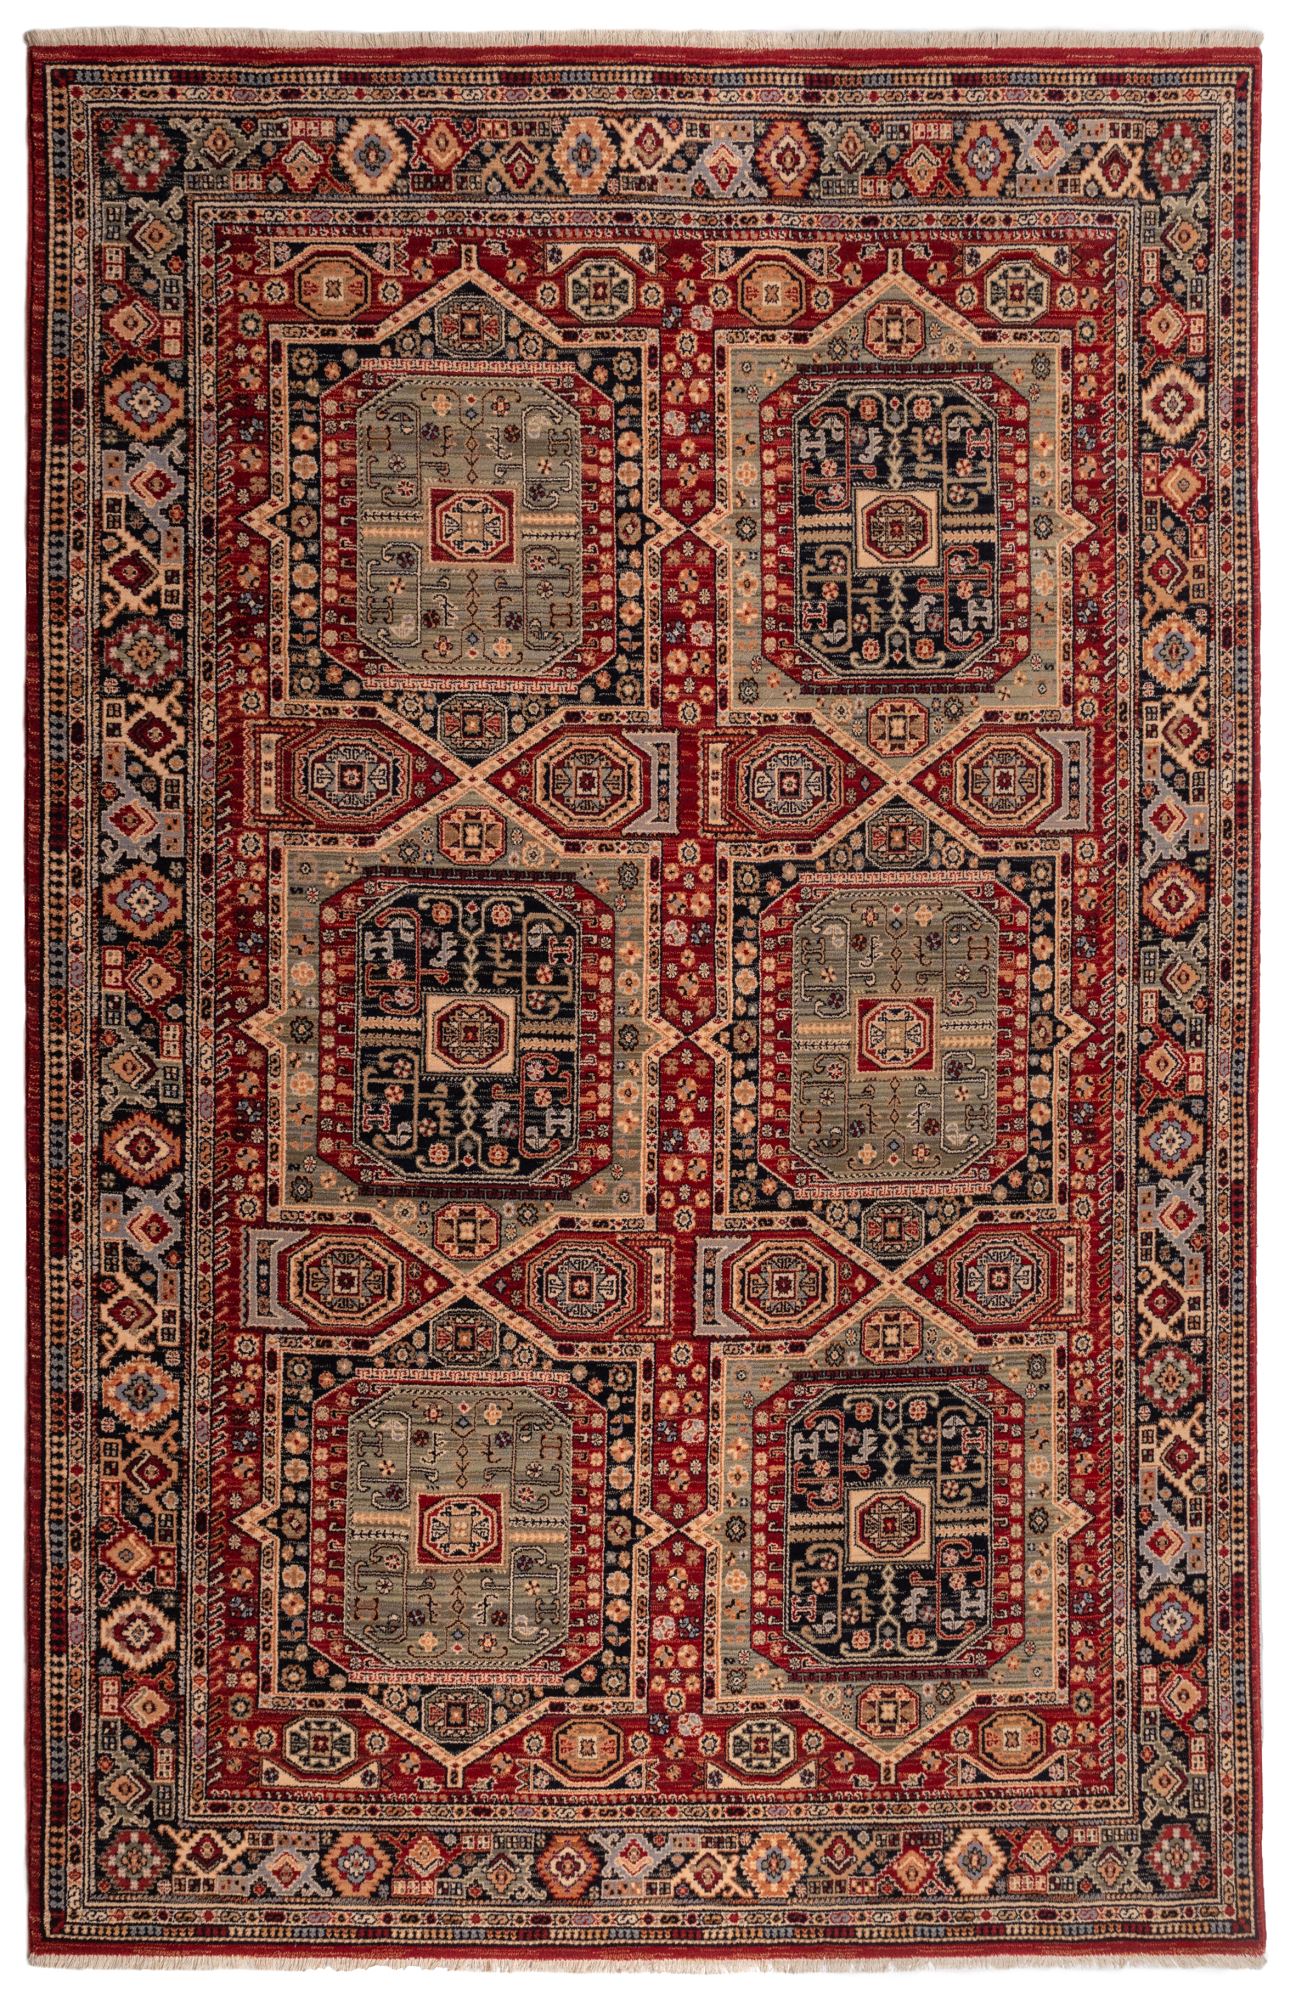 SAHARNA YALAMEH - Tapis oriental en laine rouge et marron 80x150